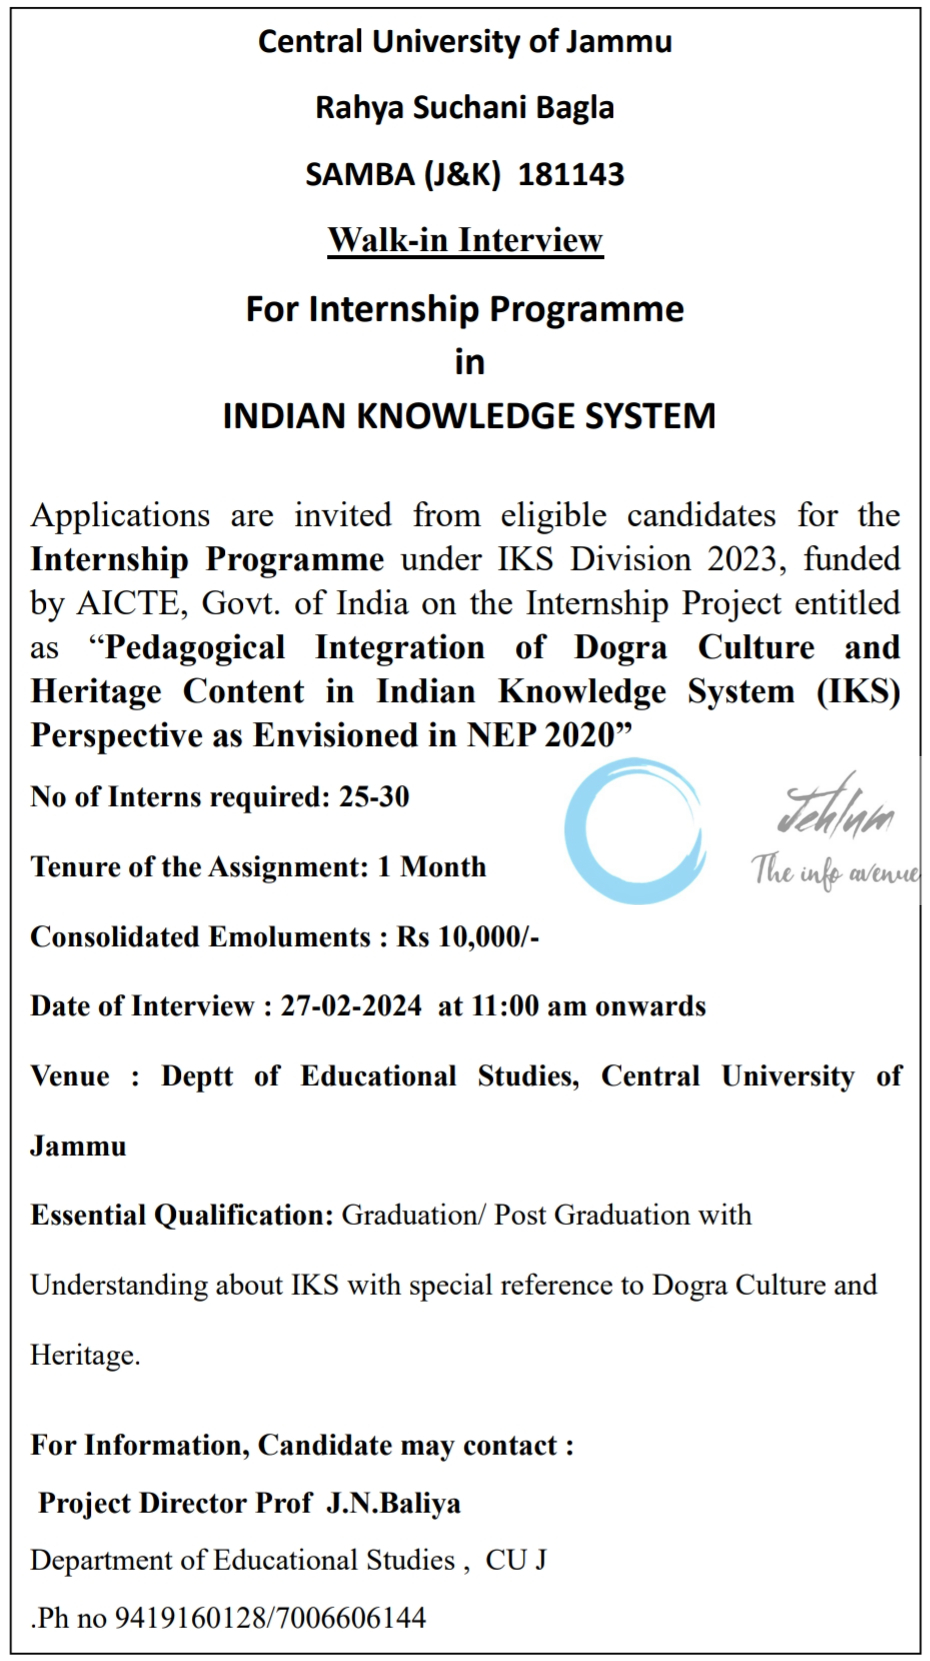 Central University of Jammu Indian Knowledge System Internship Walk-in Interview 2024